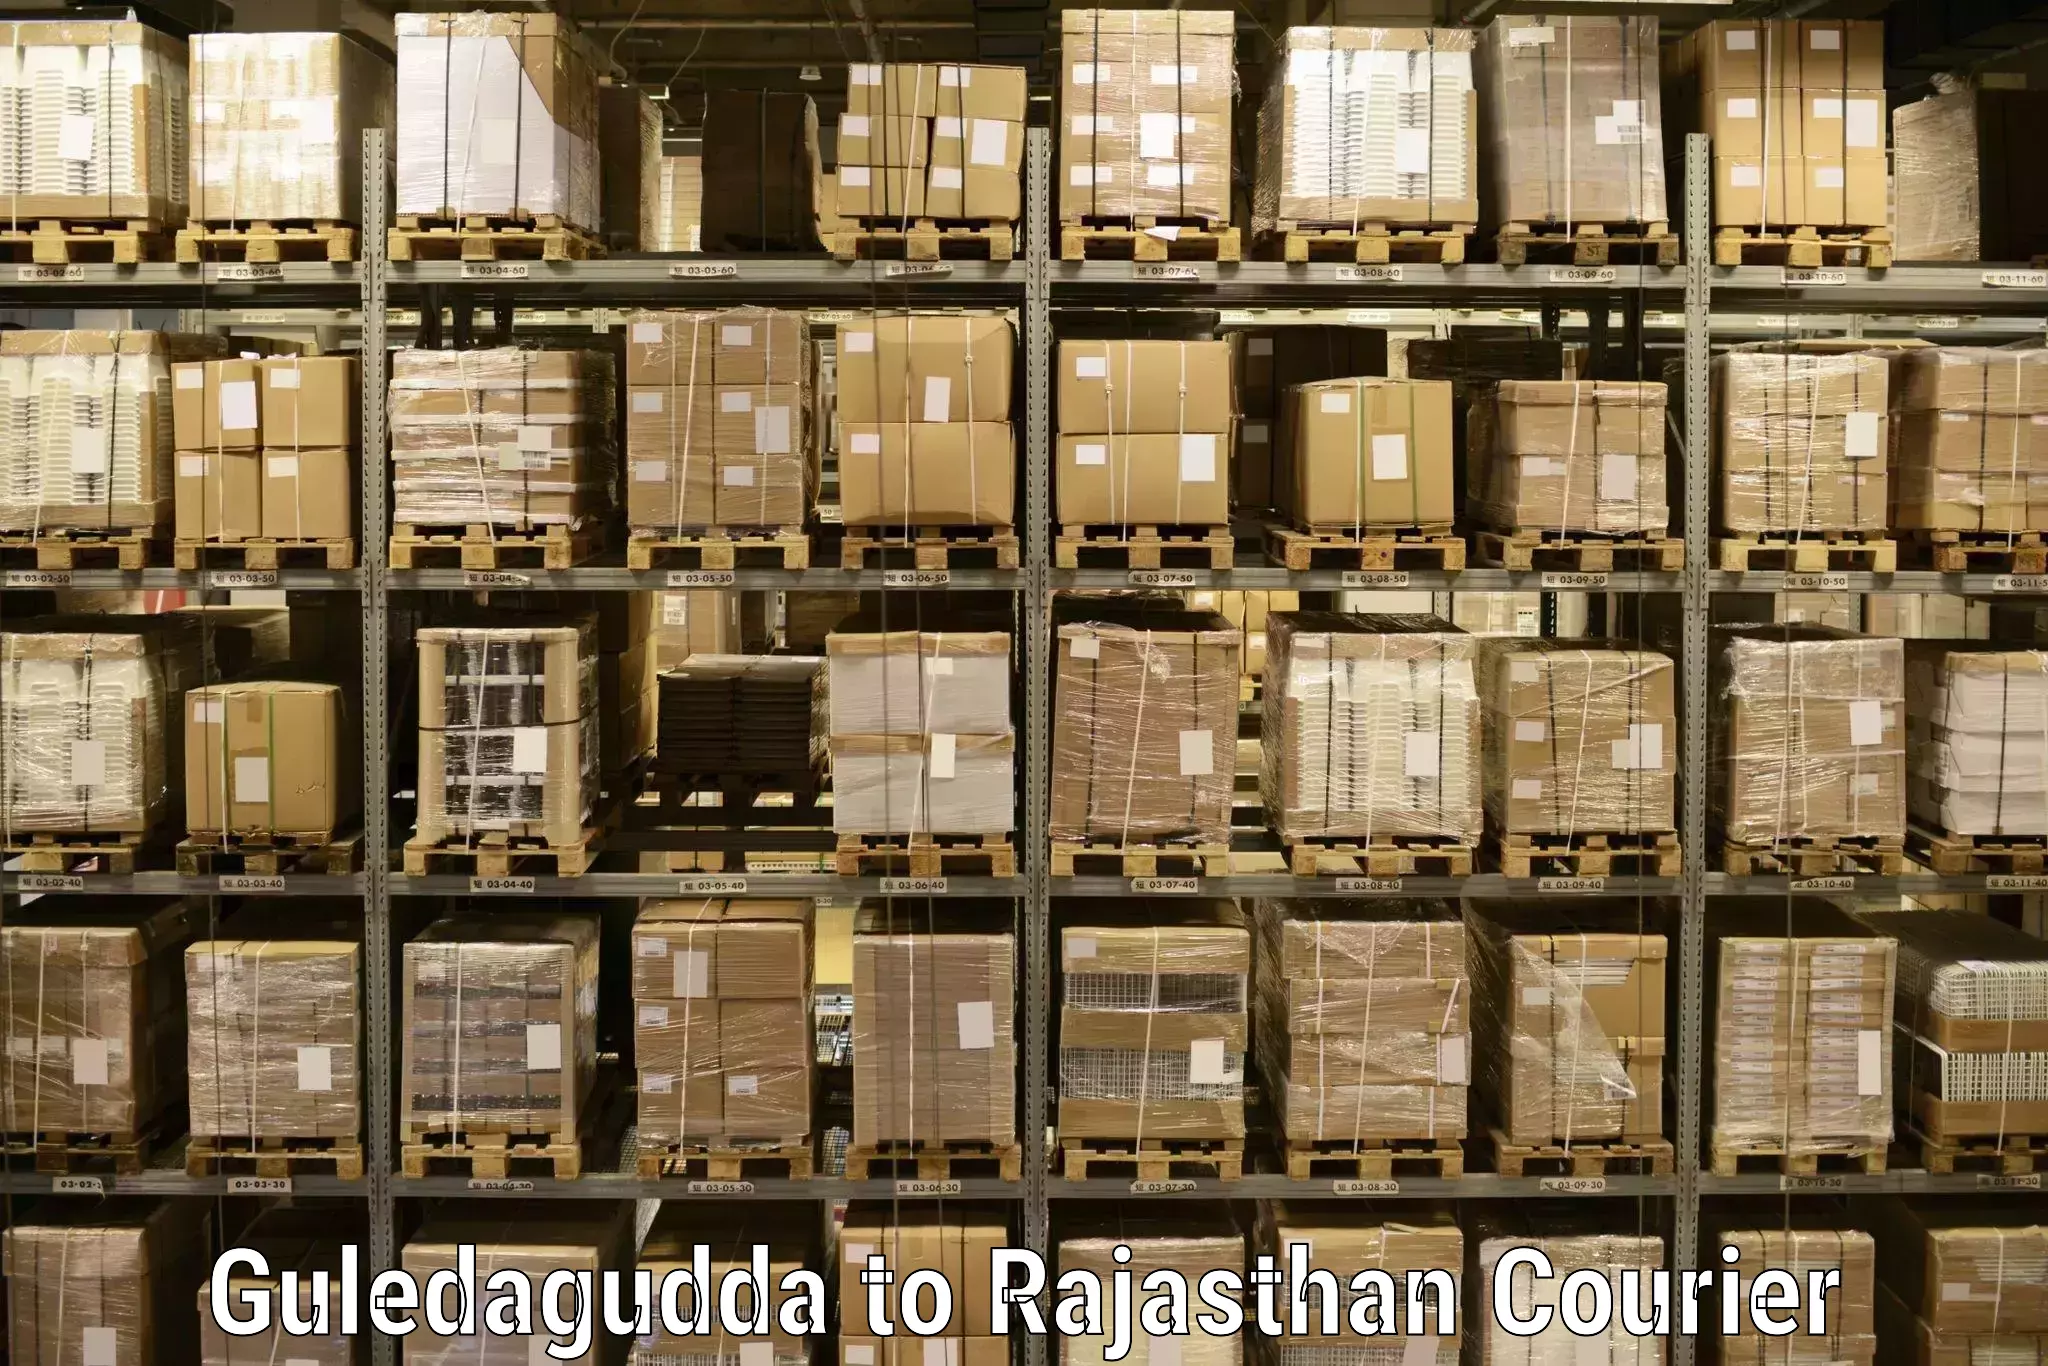 Fast delivery service Guledagudda to Merta